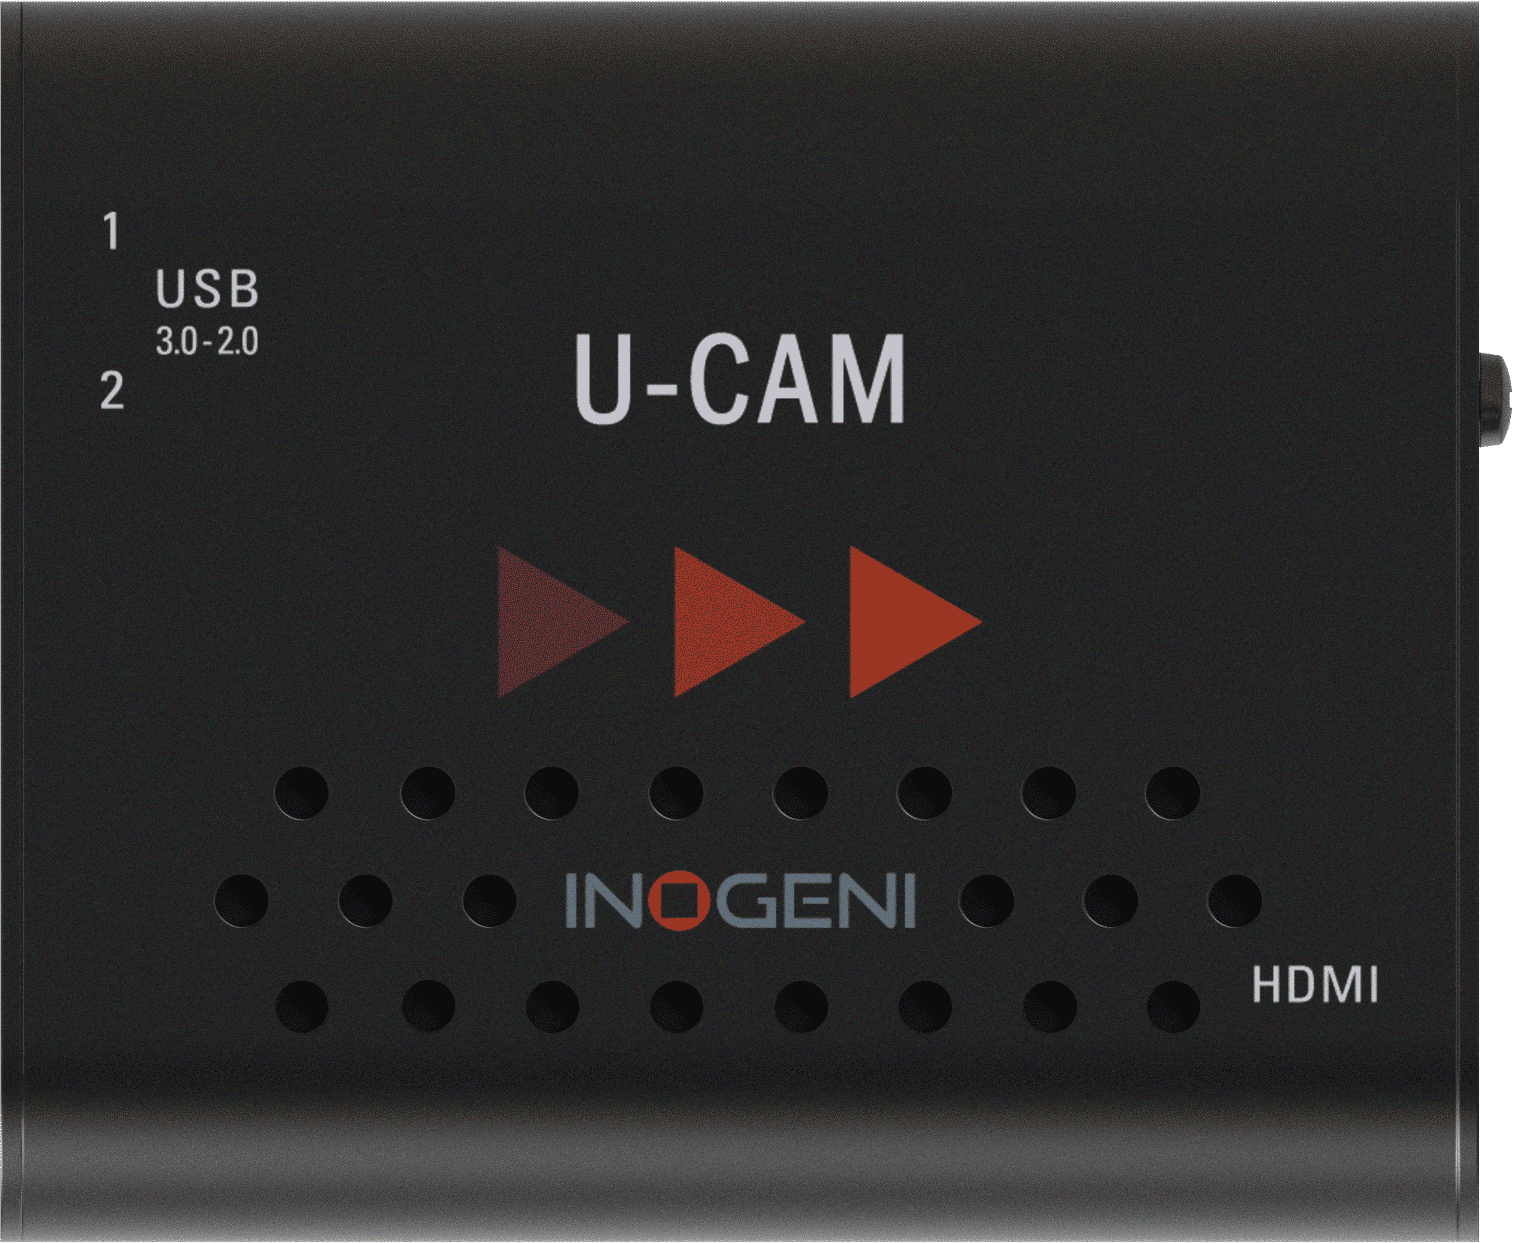 USB camera to HDMI converter